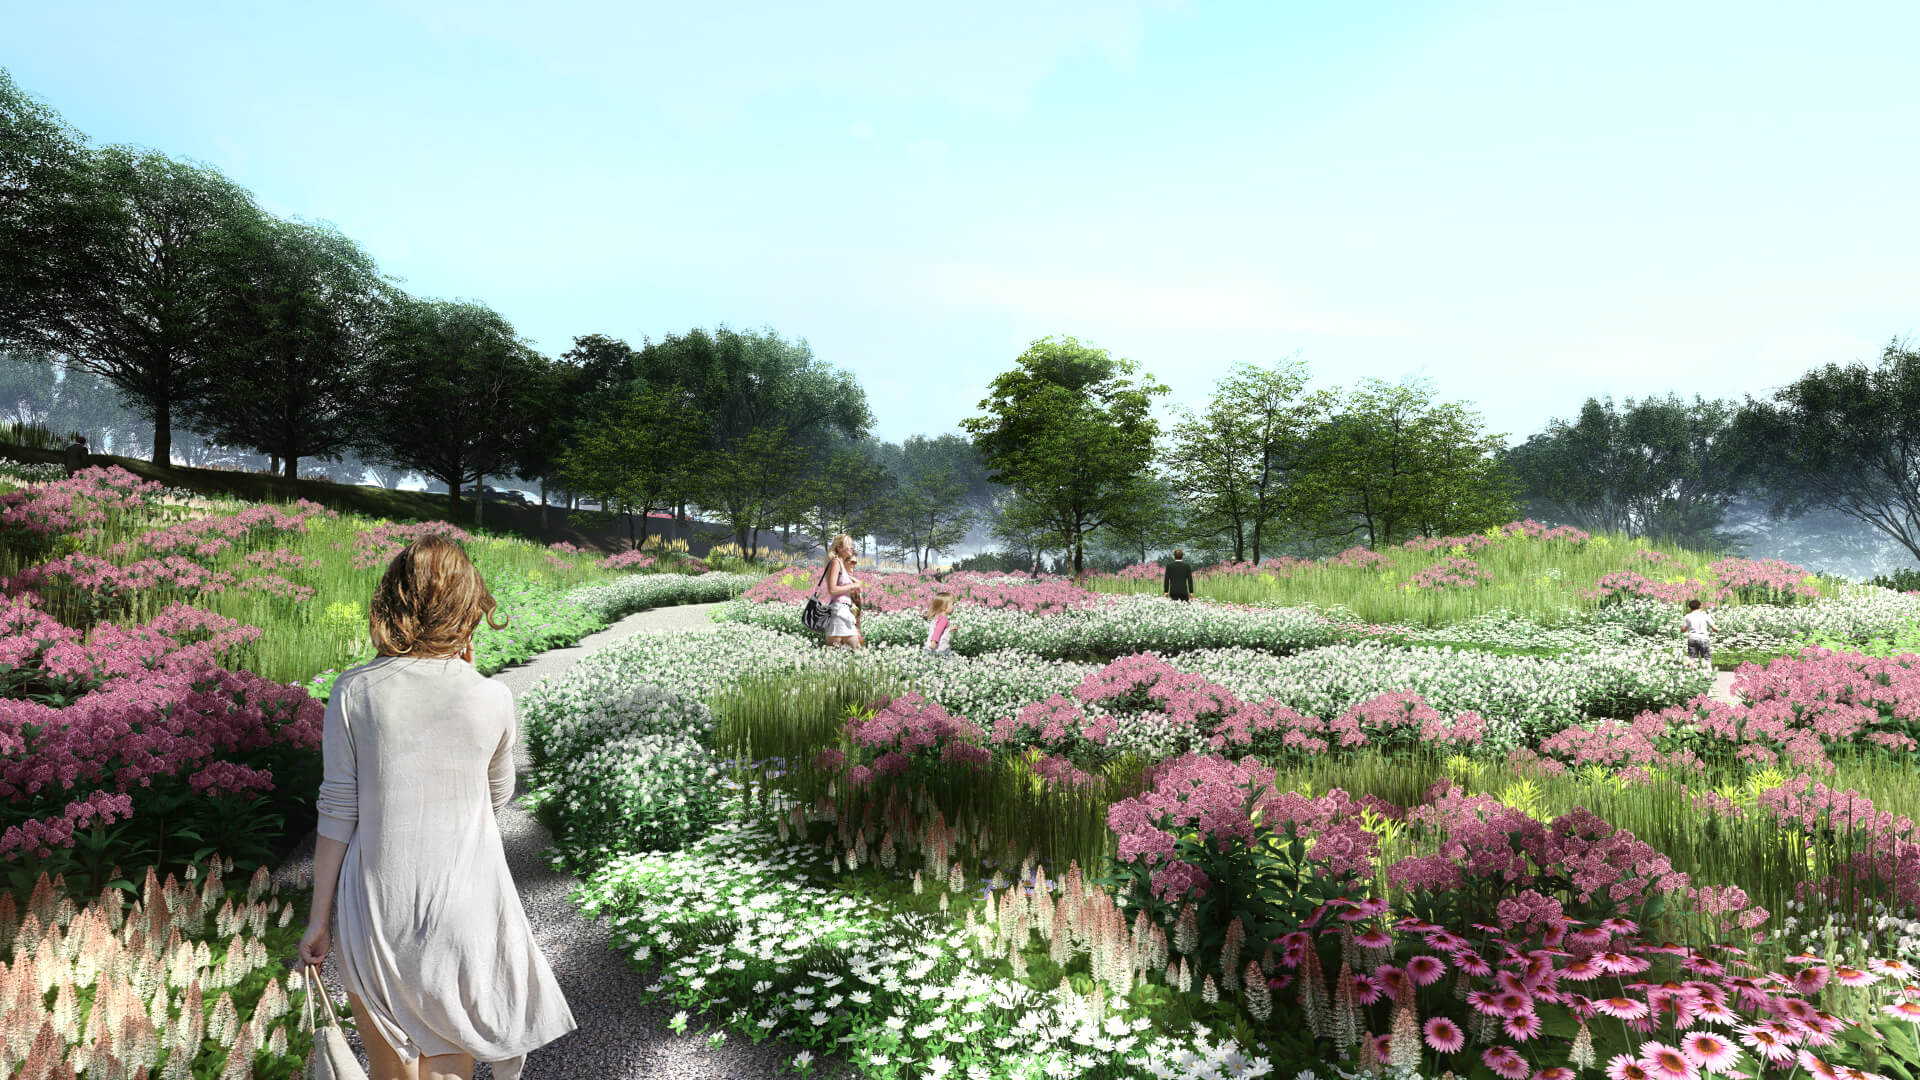 rendering of people walking through a lush meadow of flowers